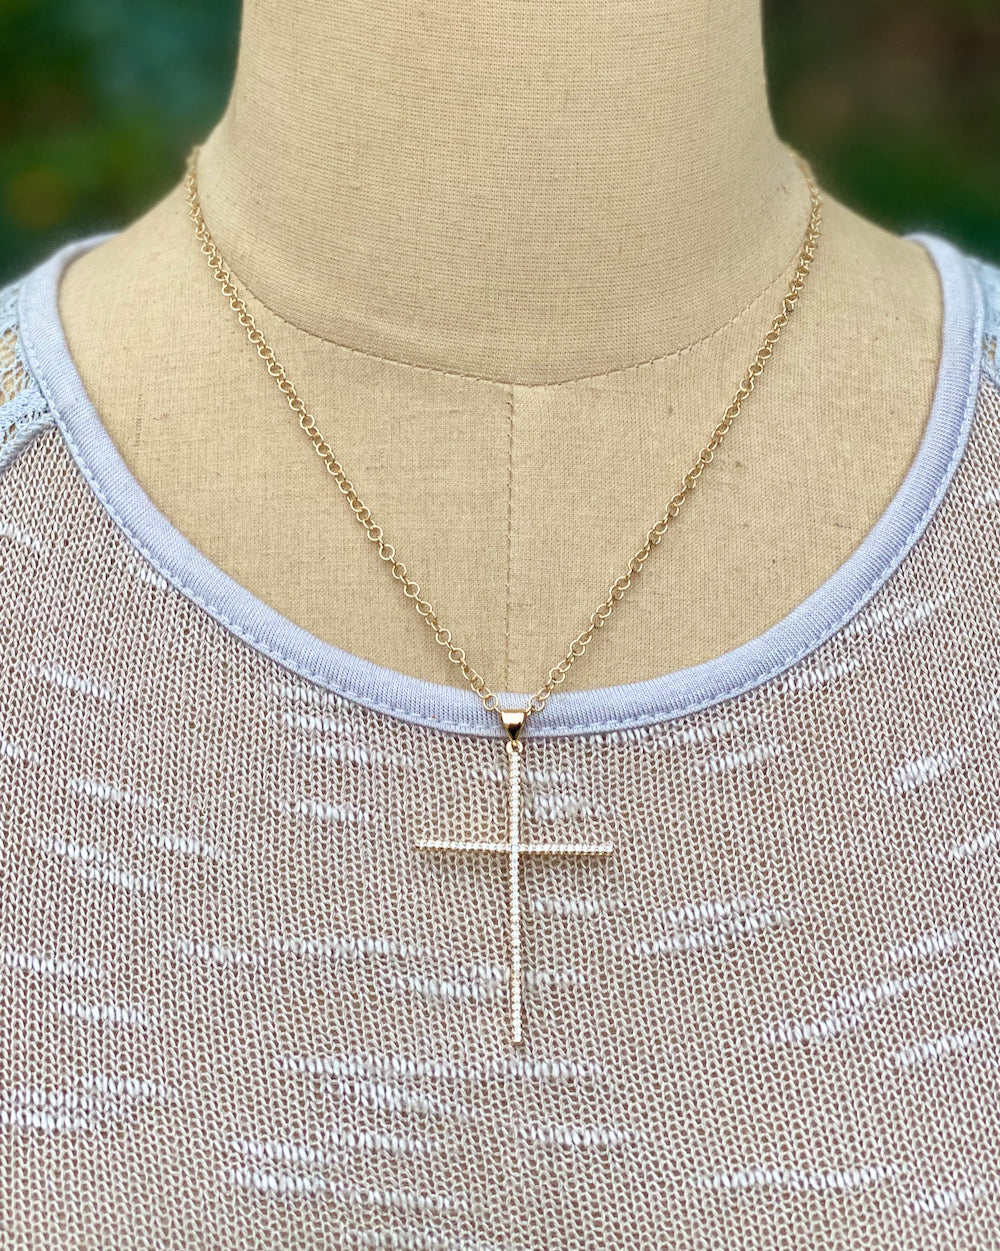 Radiance Cross Necklace